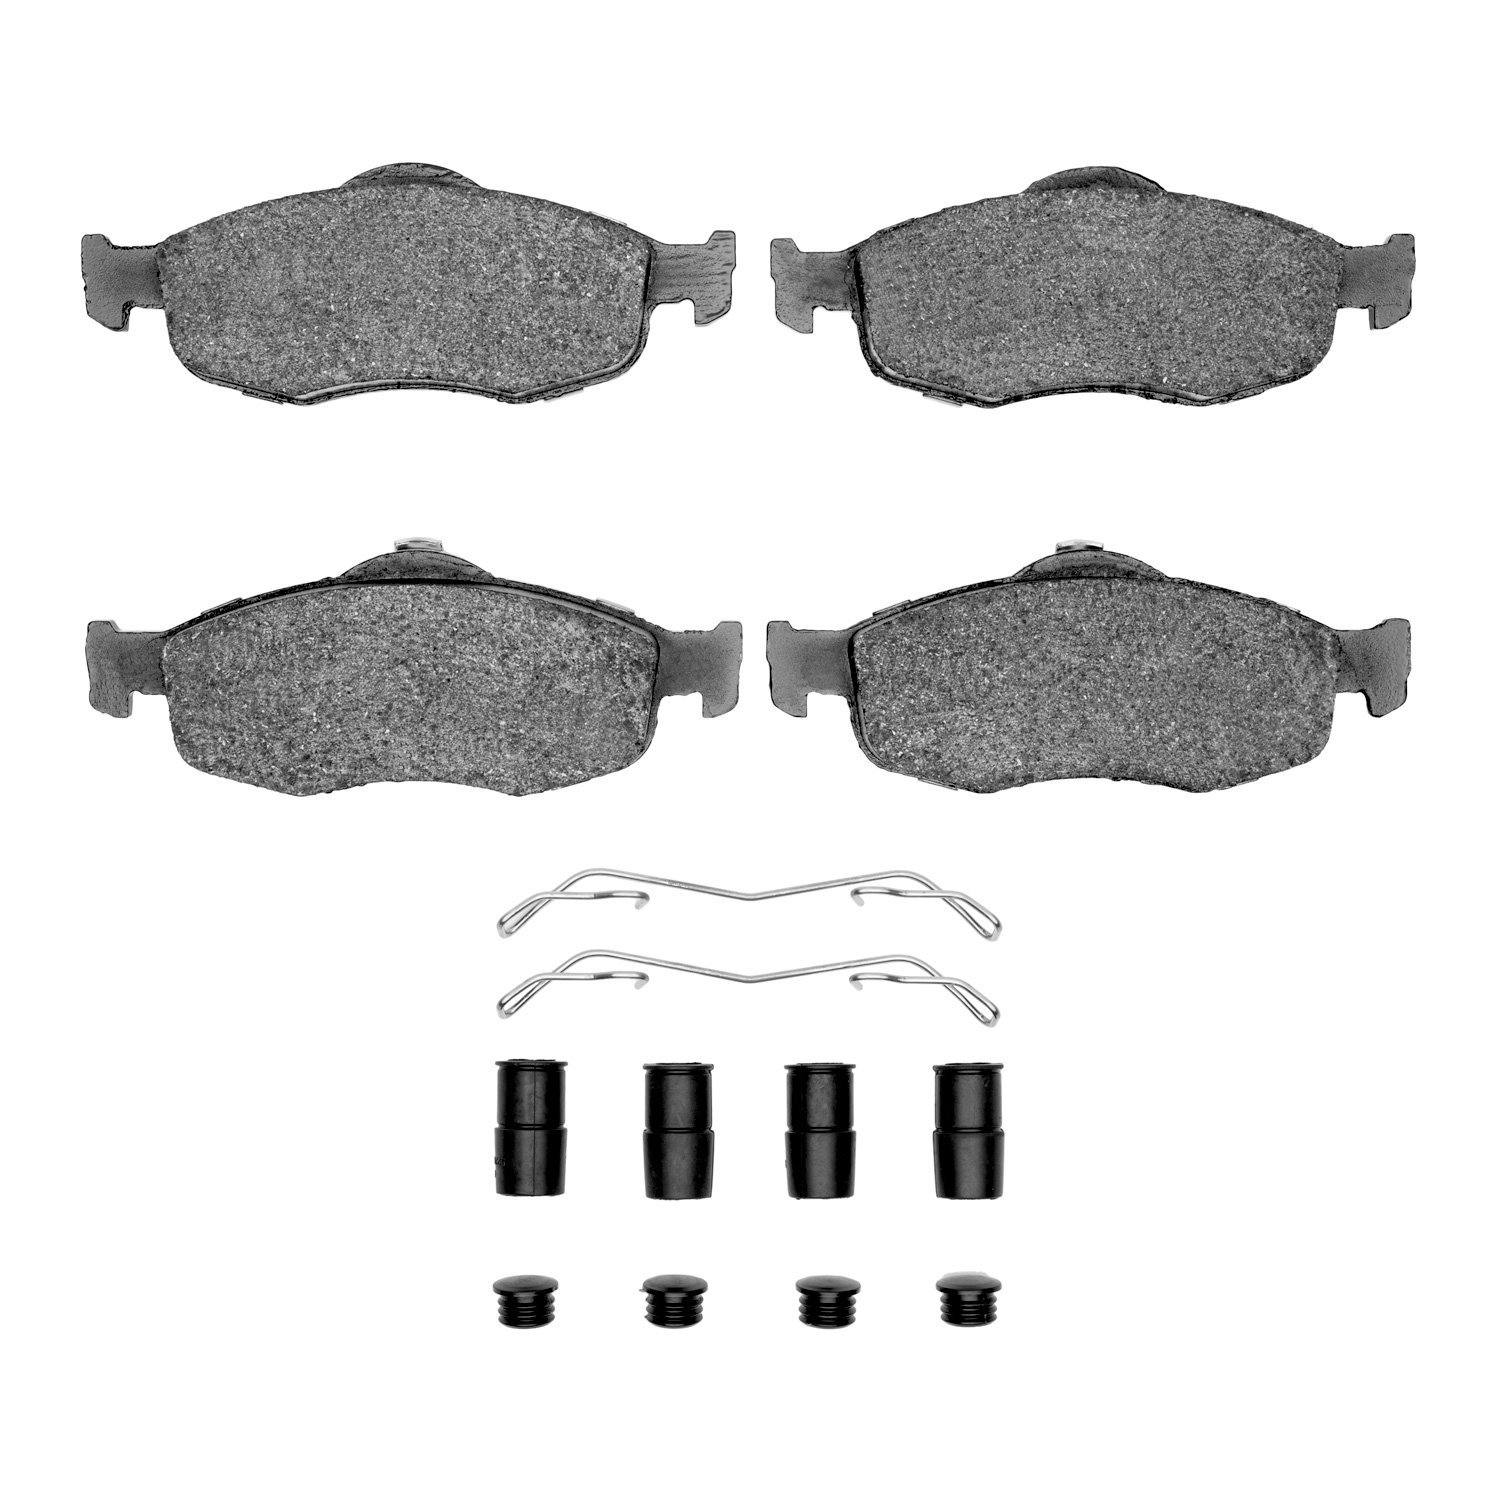 1310-0648-01 3000-Series Ceramic Brake Pads & Hardware Kit, 1995-2002 Ford/Lincoln/Mercury/Mazda, Position: Front